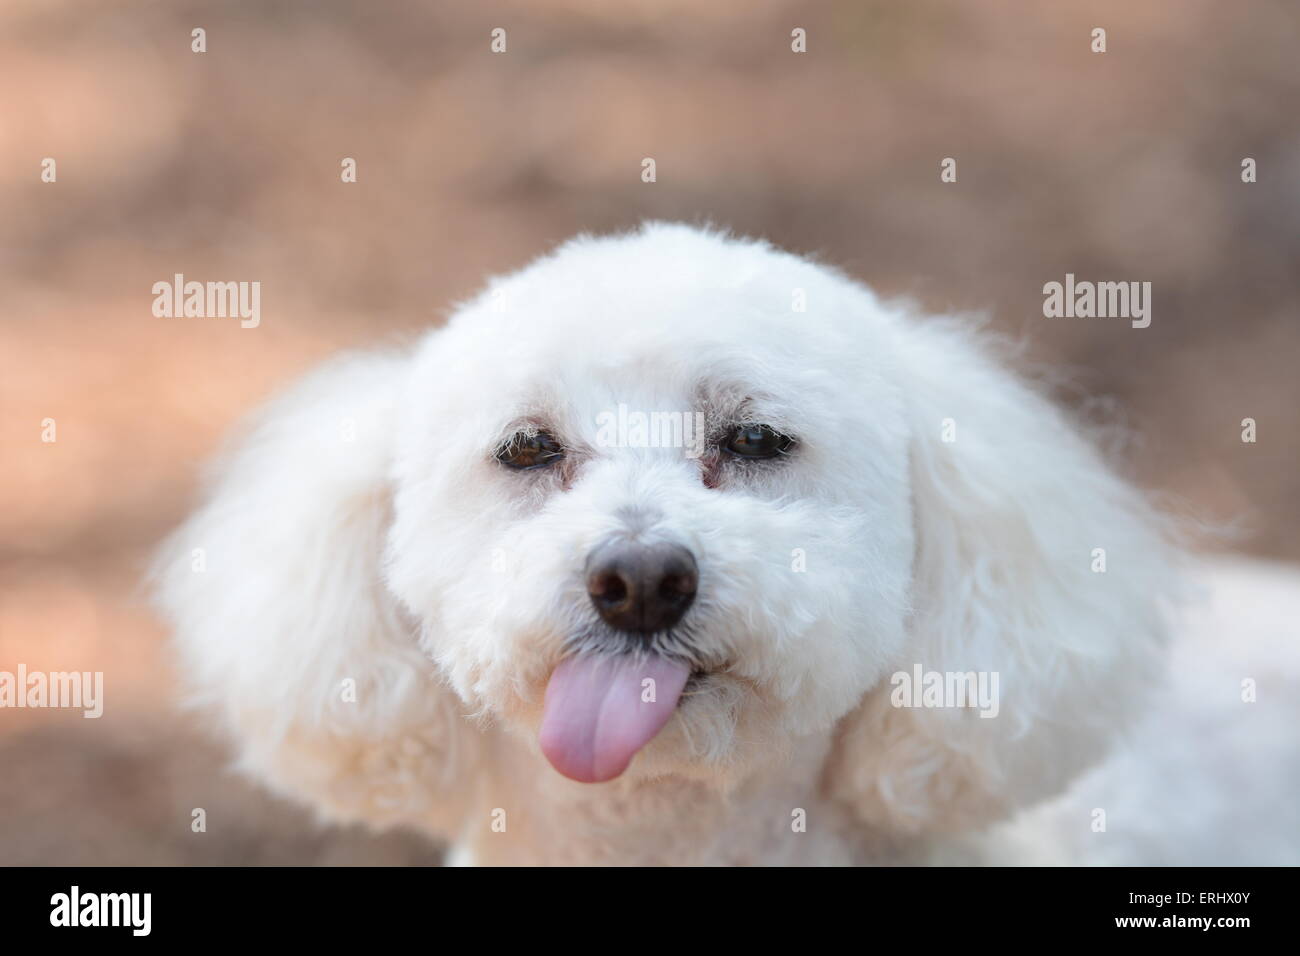 Dog sticking out tongue Stock Photo